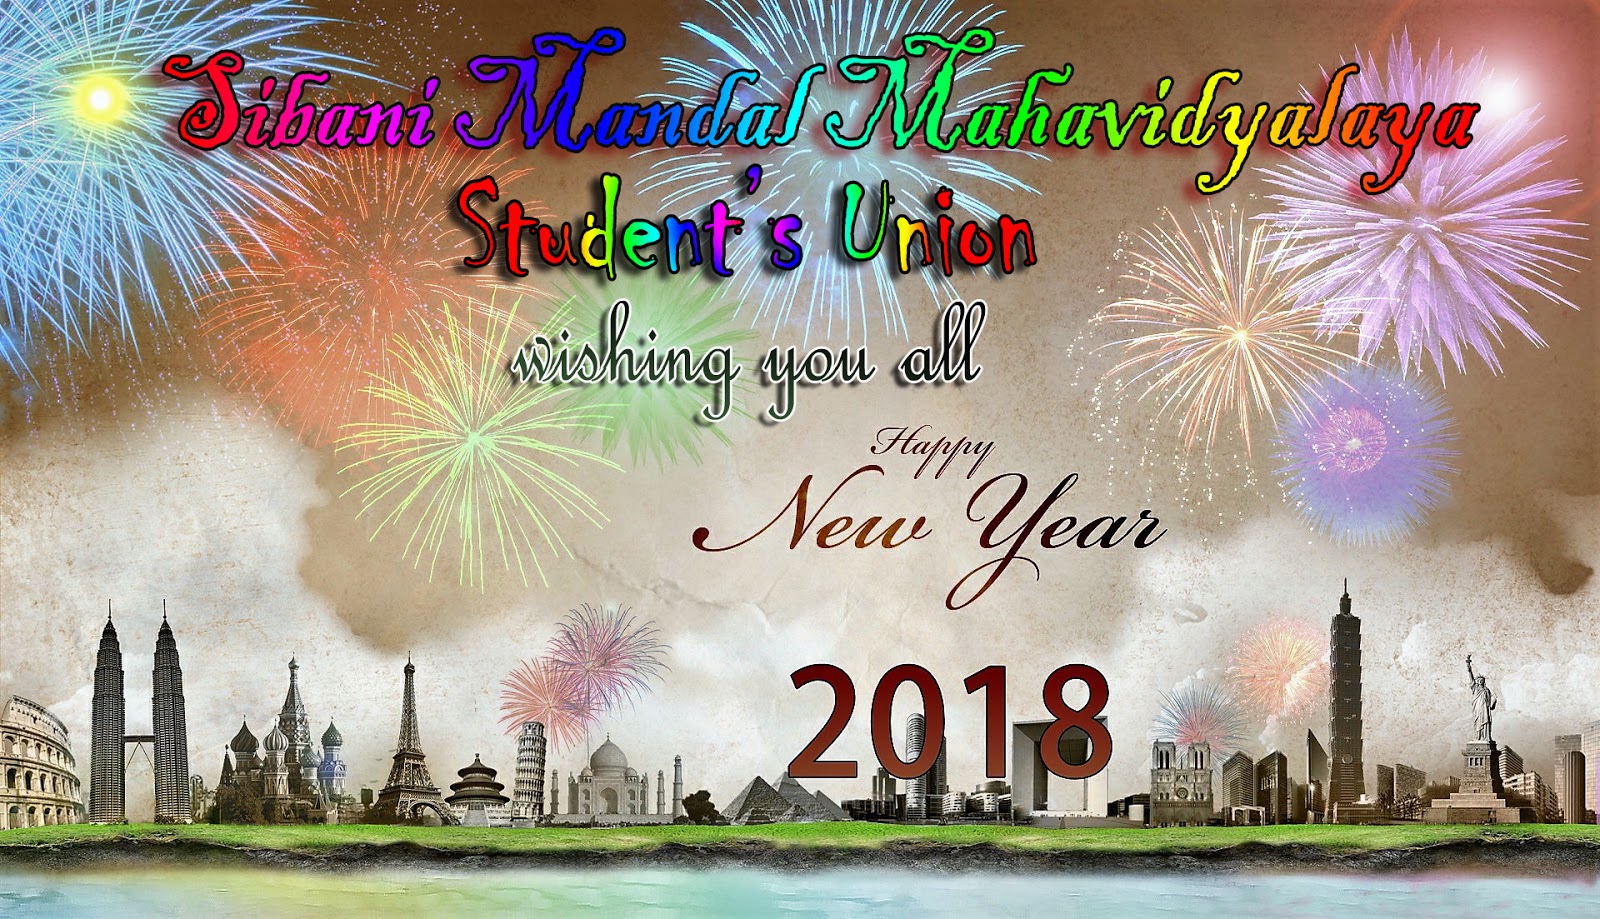 SIBANI MANDAL MAHAVIDYALAYA STUDENT UNION WISHING YOU A VERY HAPPY NEW YEAR 2018 IN ADVANCE...